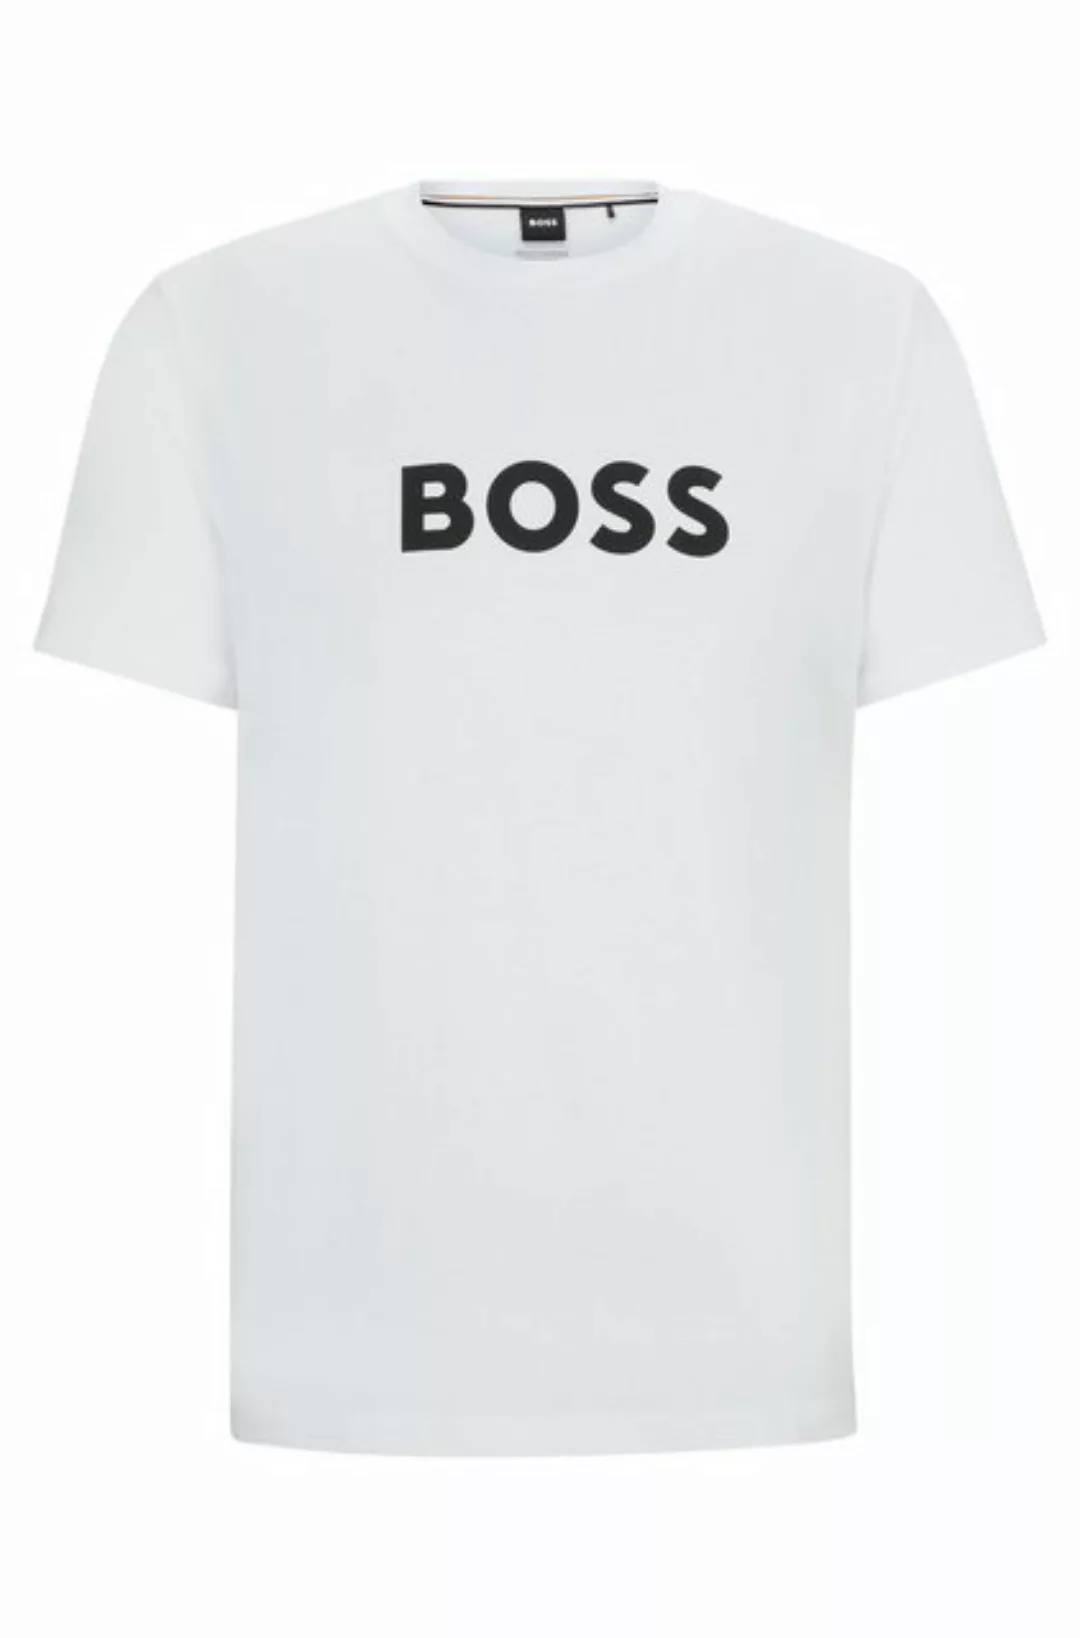 BOSS T-Shirt T-Shirt RN mit großem BOSS Logoprint, Rundhals günstig online kaufen